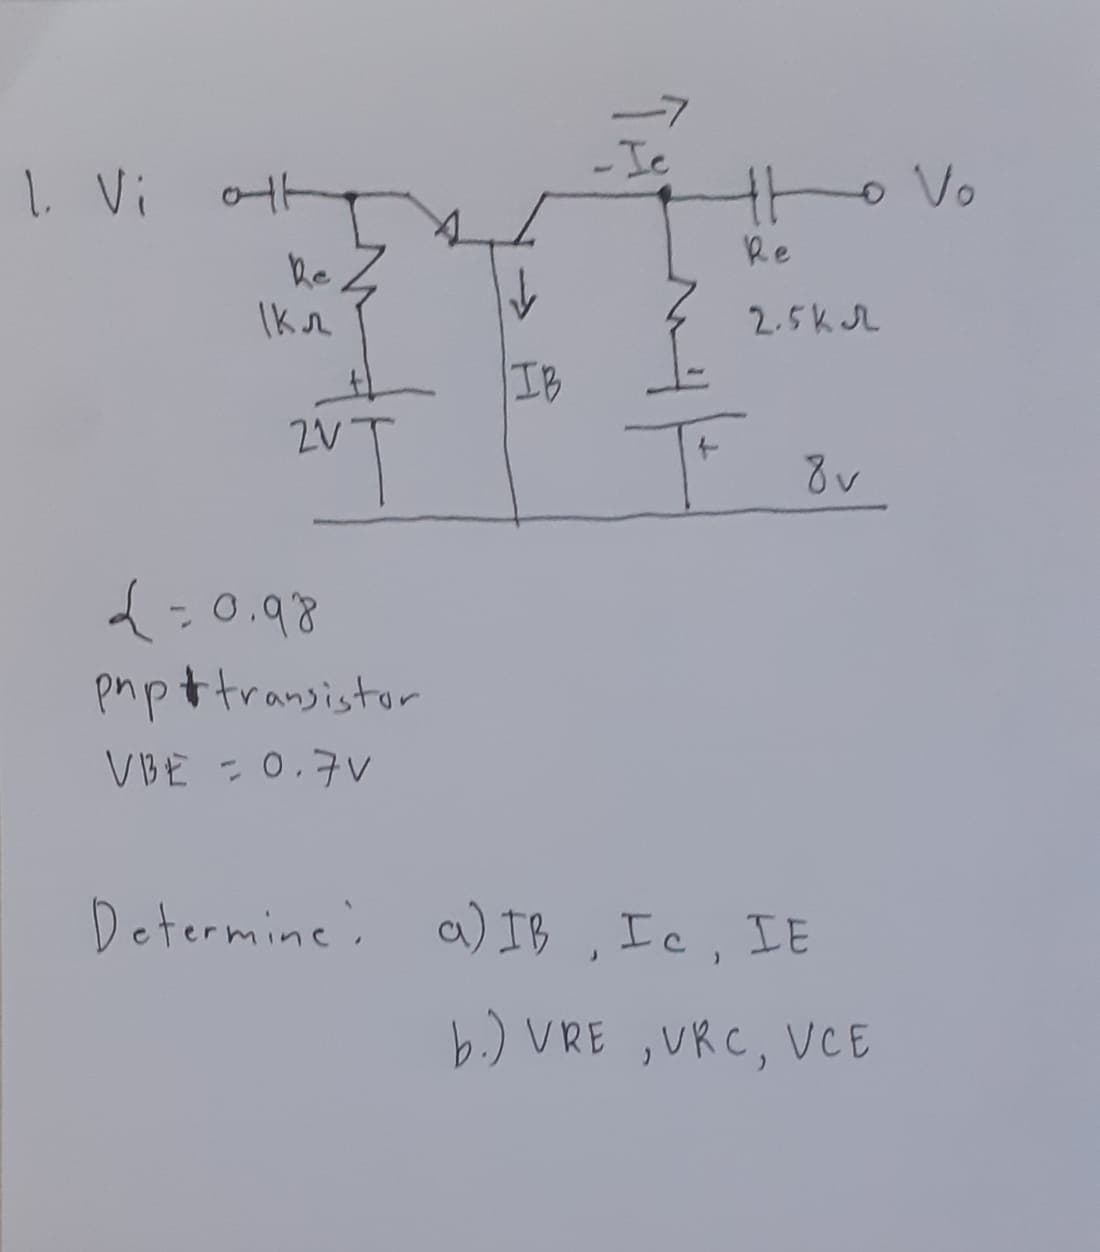 Ic
1. Vi
oVo
Re
he Z
Ik r
2.5kL
IB
2V
{-0.98
pmpttransistor
V BE =0,7V
Determine: a)IB , Ic, IE
b.) VRE ,URC, VCE
